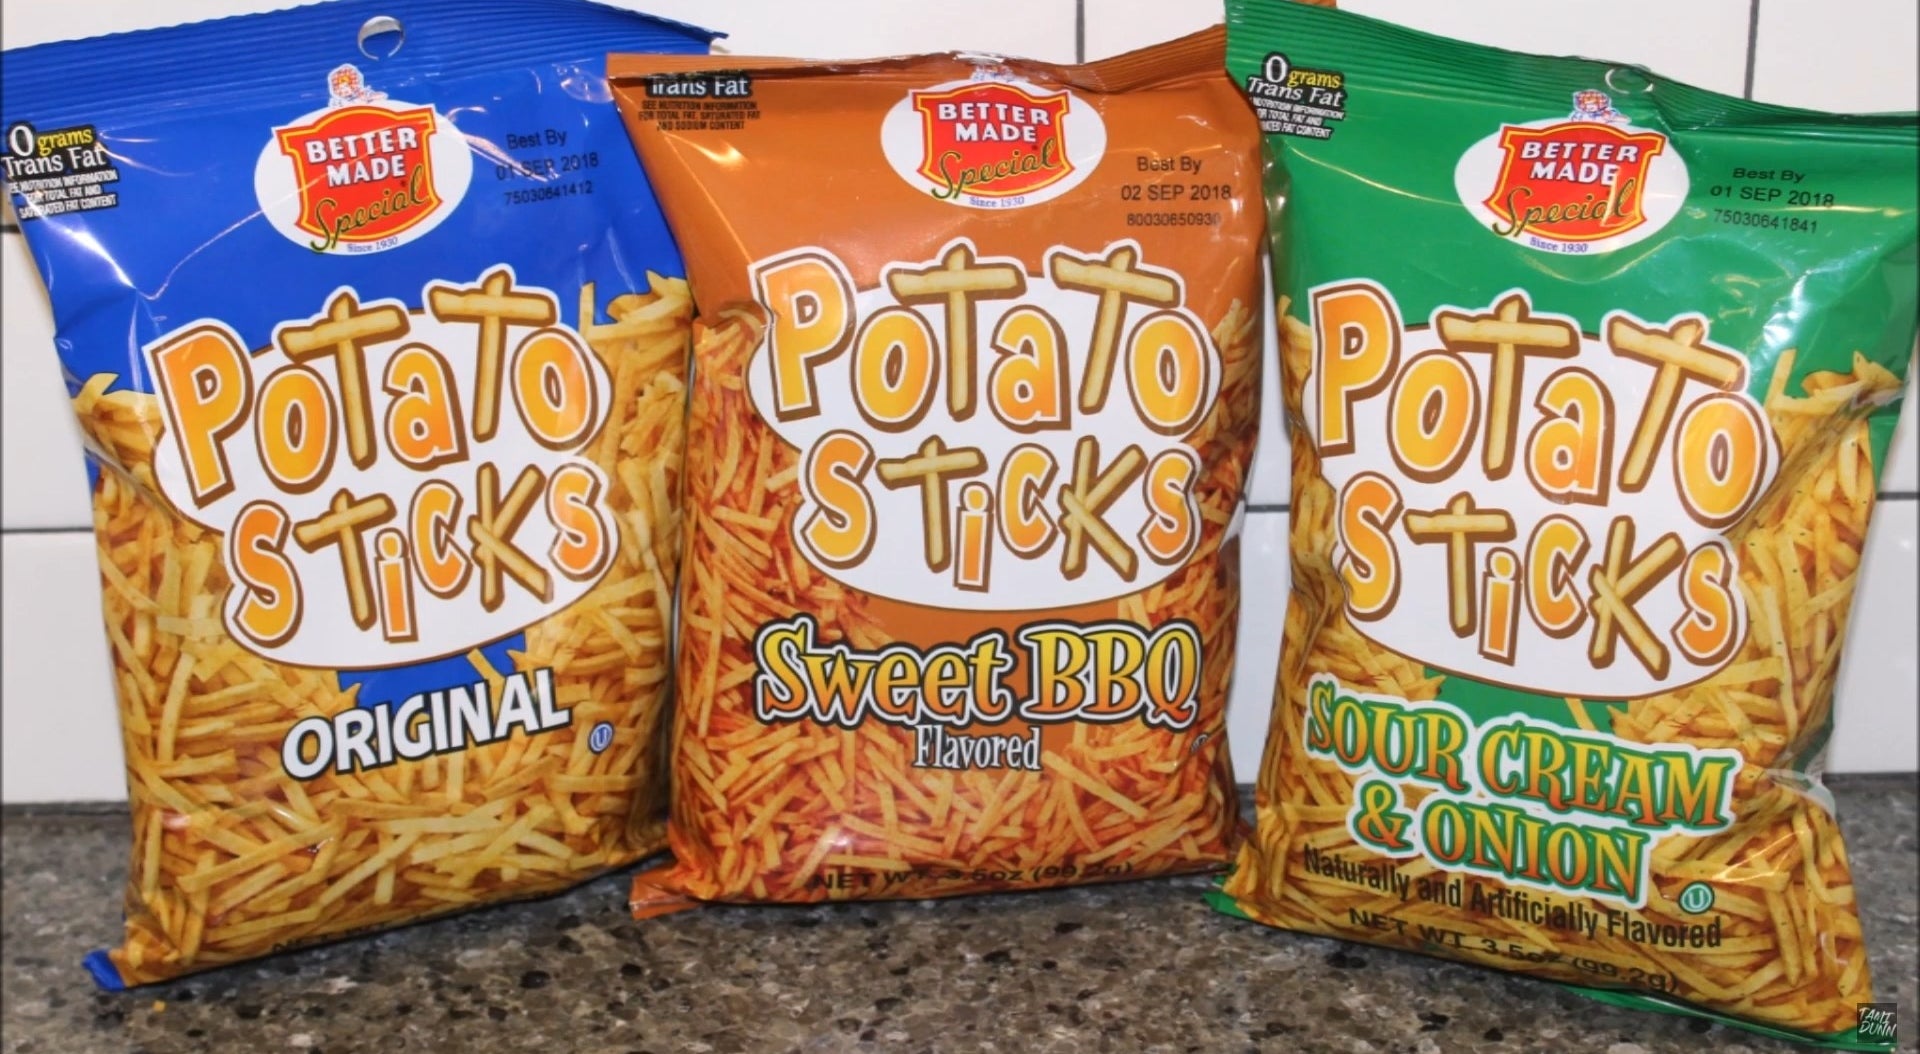 Three flavors of potato sticks